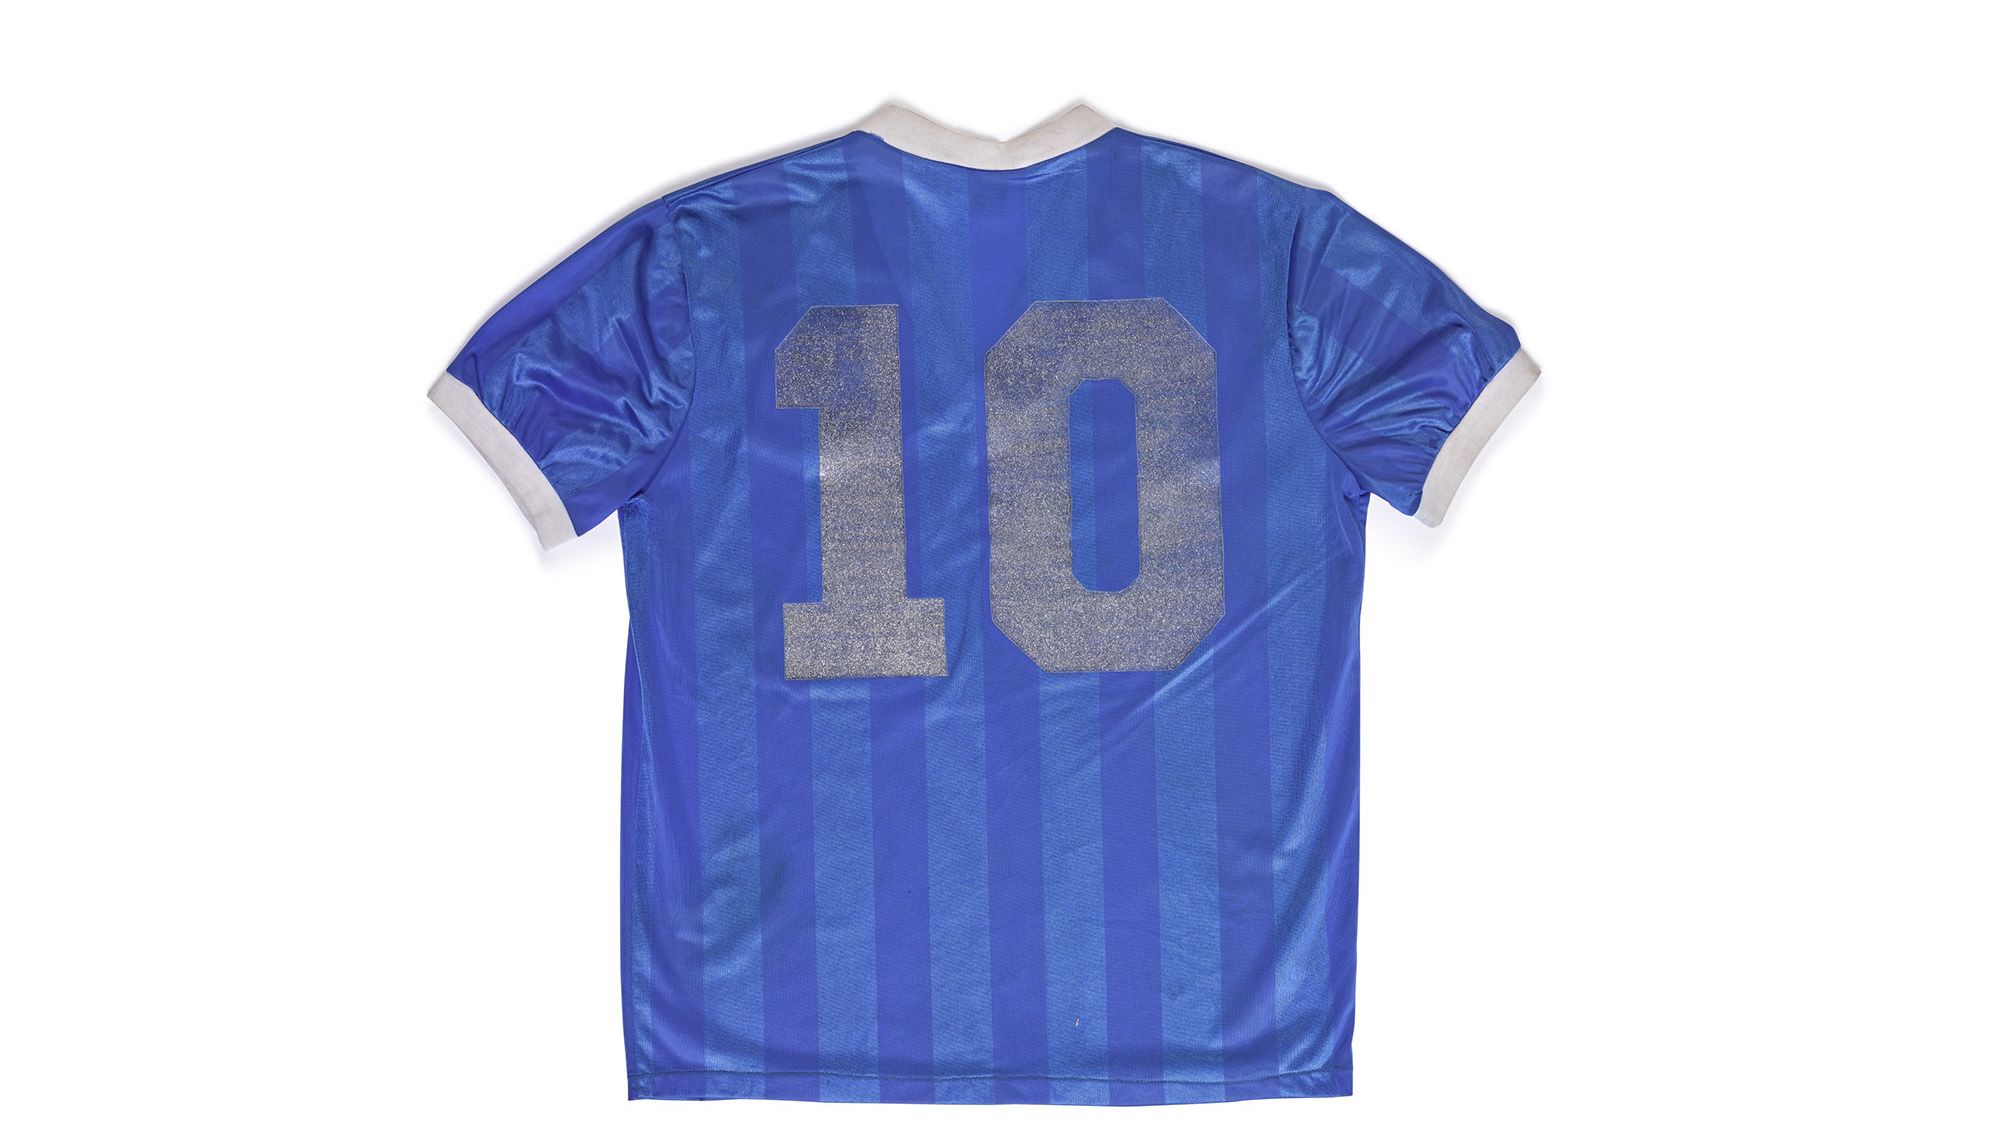 Diego Maradona: Argentina legend's 'Hand of God' shirt sells for £7.1m at  auction - BBC Sport